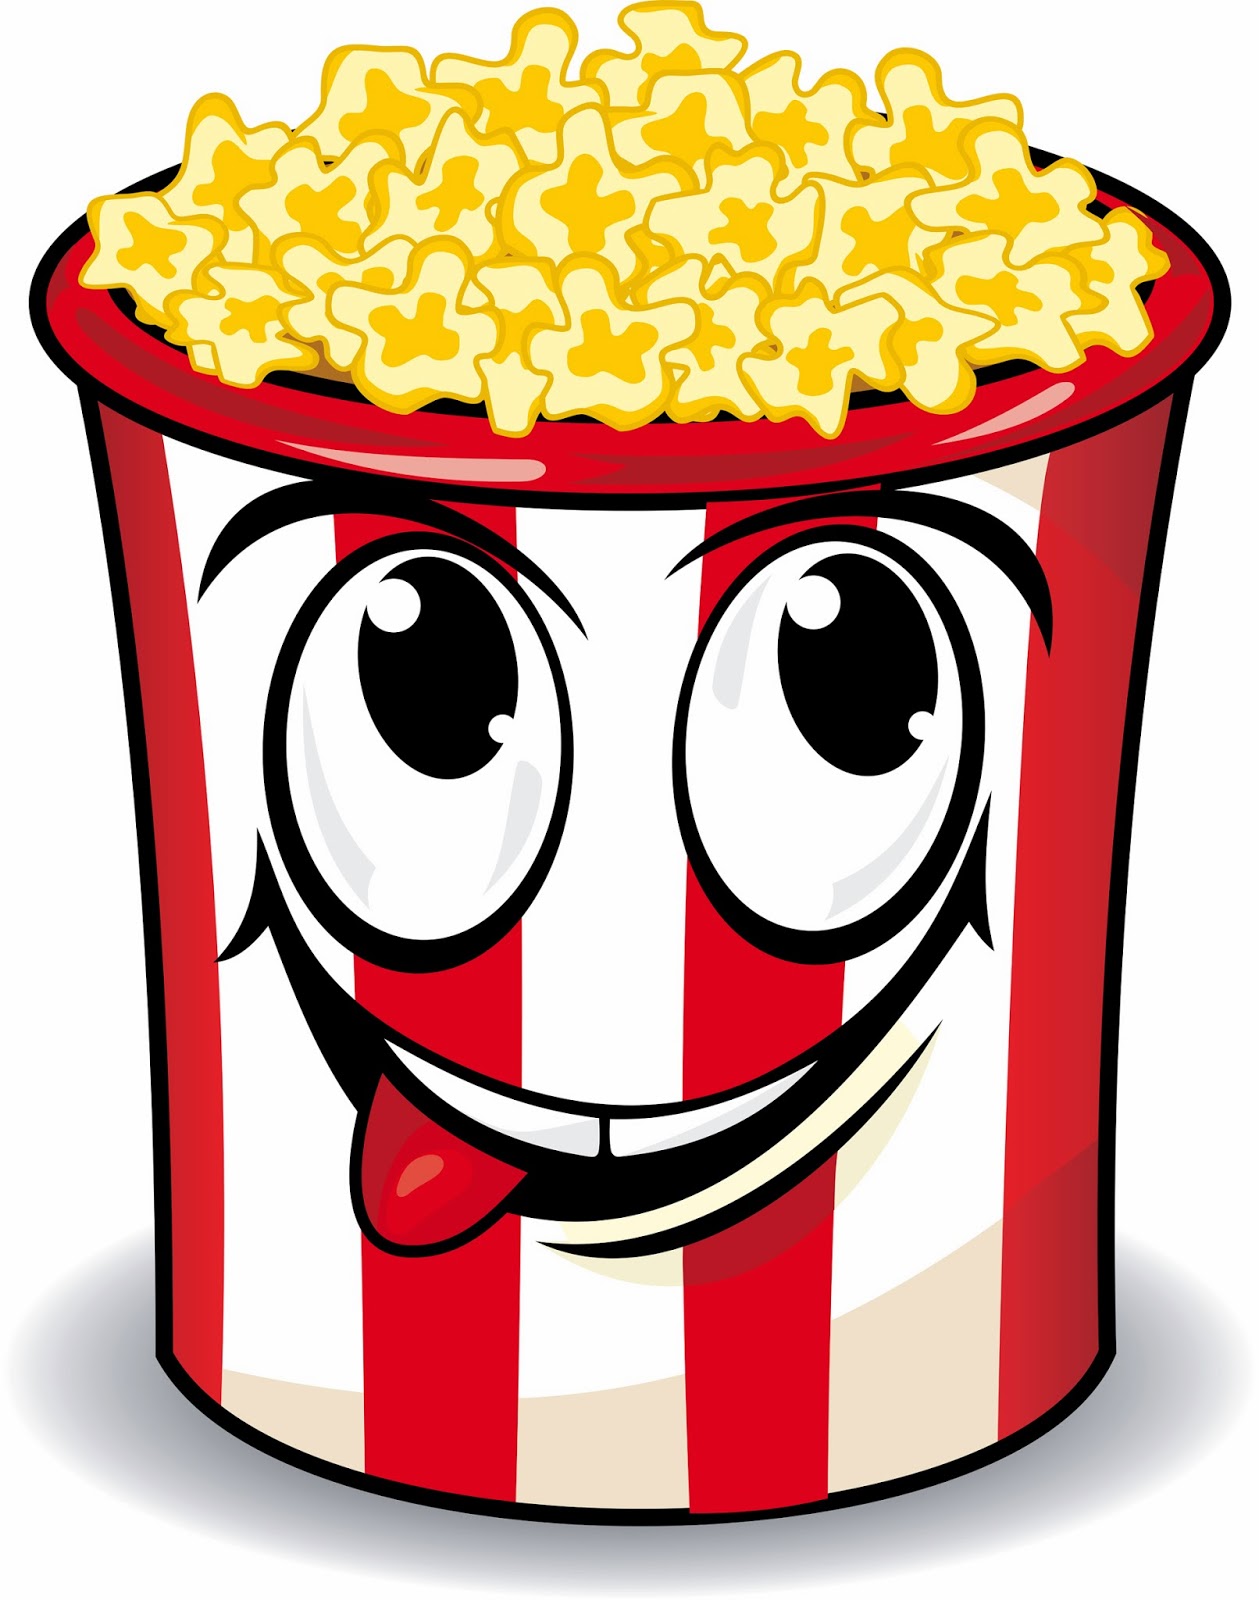 Popcorn clipart free clip art - Clipart Of Popcorn